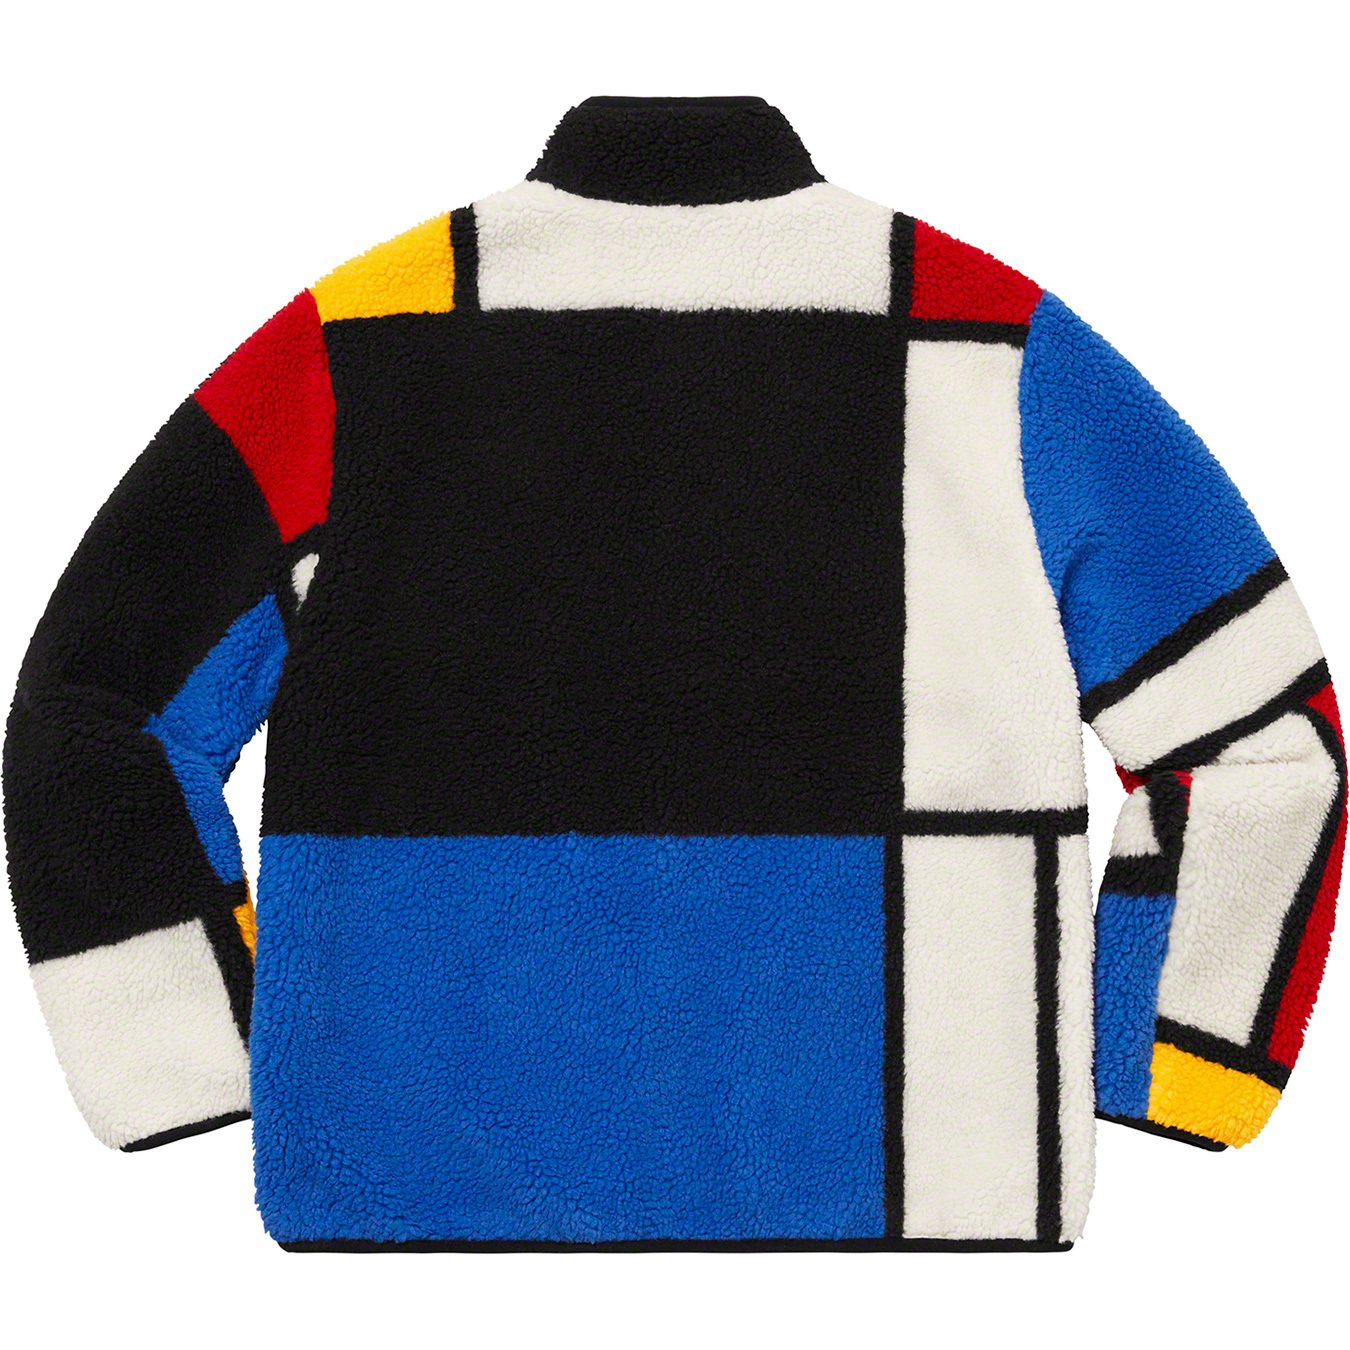 Reversible Colorblocked Fleece Jacket | Supreme 20fw